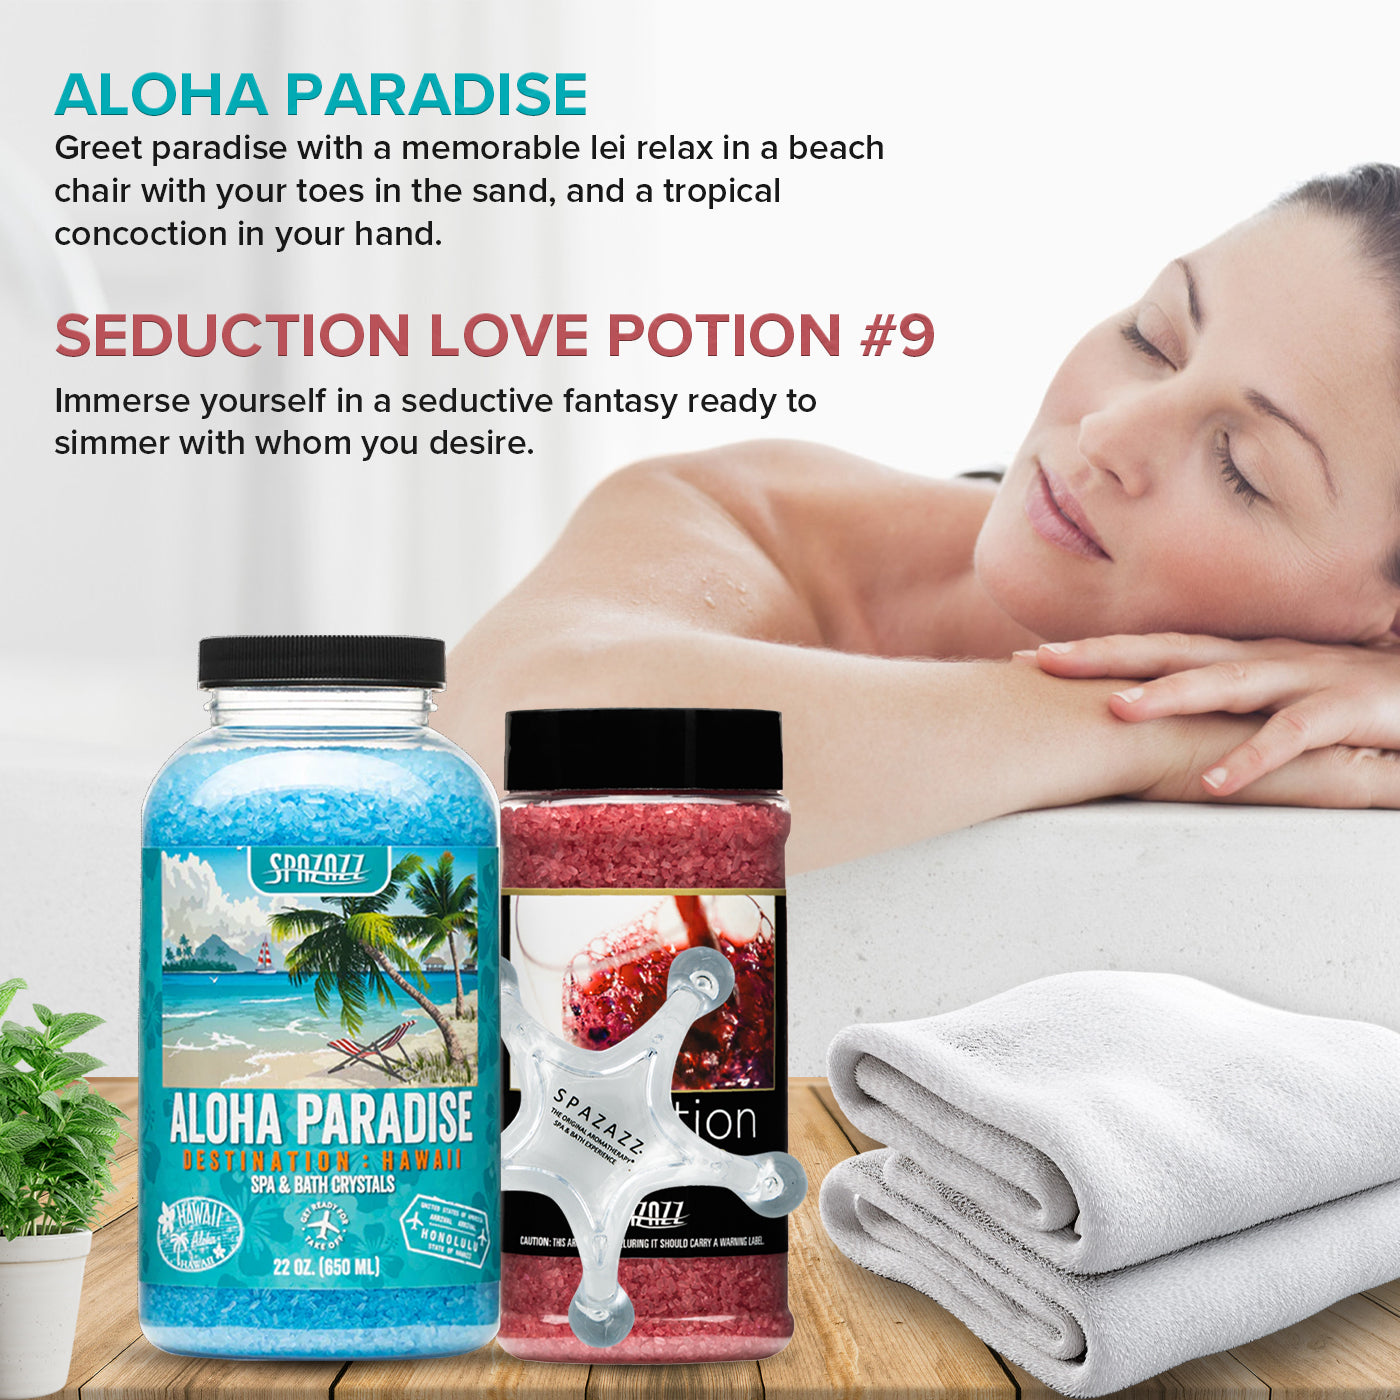 Spa and Bath Salt Aromatherapy Crystals for Hot Tub - Gift Bundle Set The Mood Love Potion #9 Seduction 17oz - Destinations Hawaii Aloha Paradise 22oz With 5 Point Full Body Massage Tool